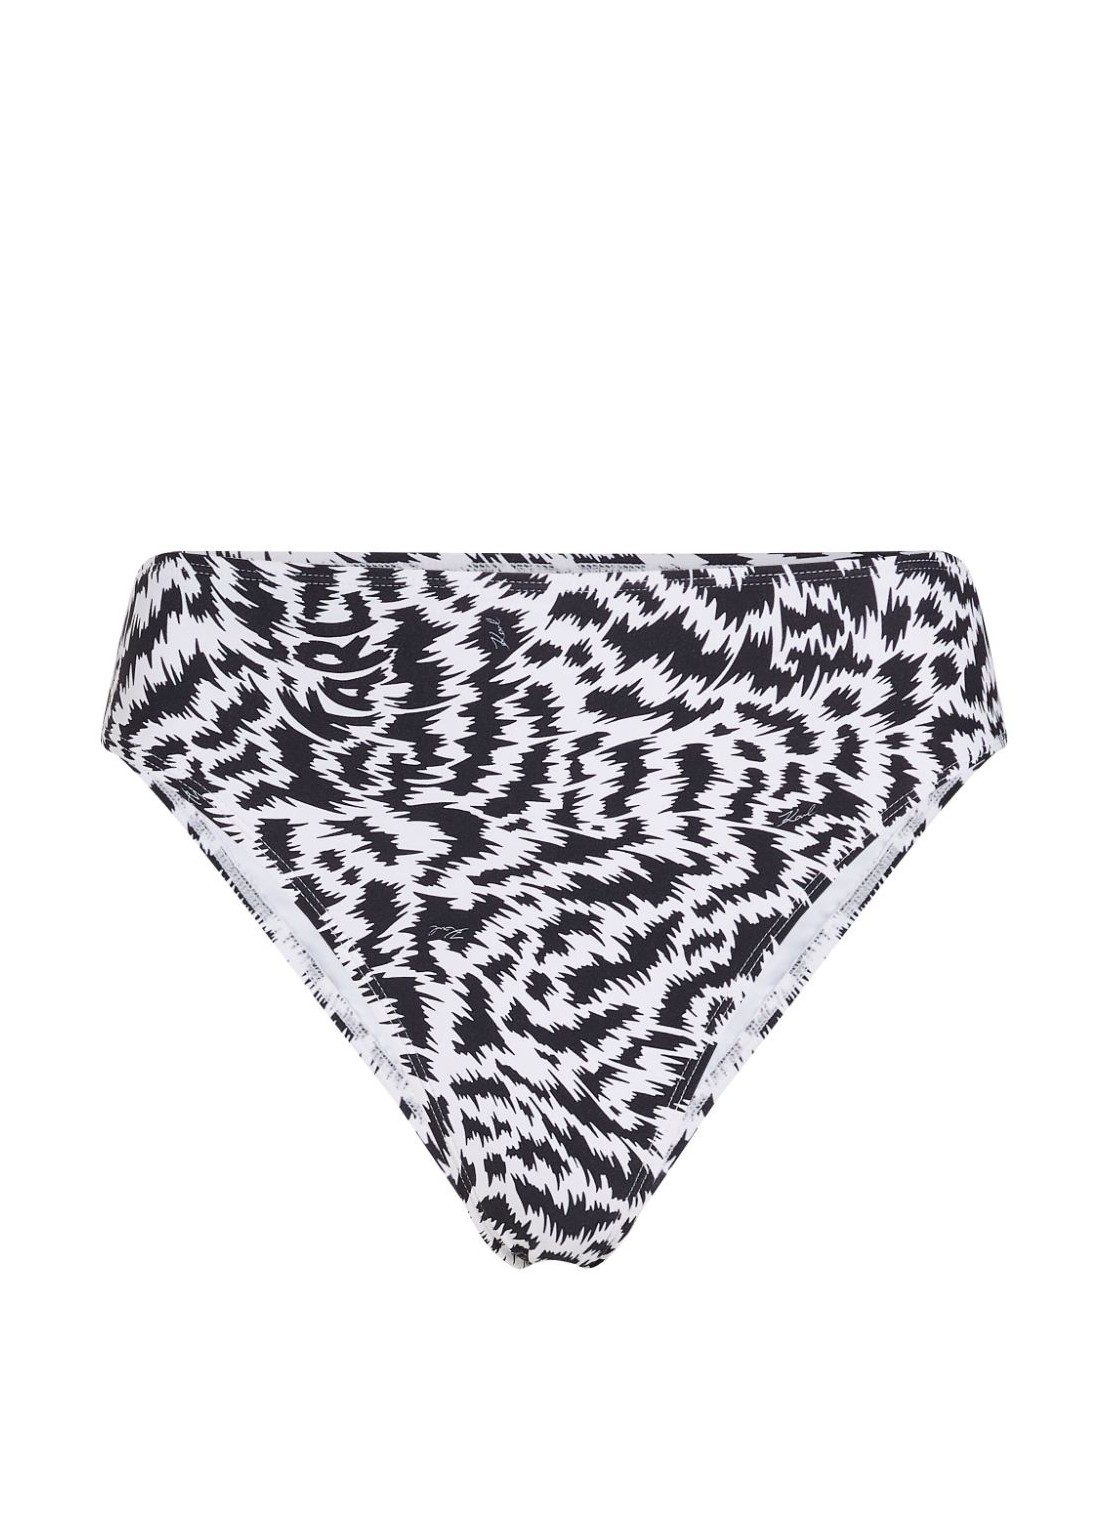 Bikini braga karl lagerfeld bikini panties womananimal print high bottoms - 241w2220 r32 talla S
 